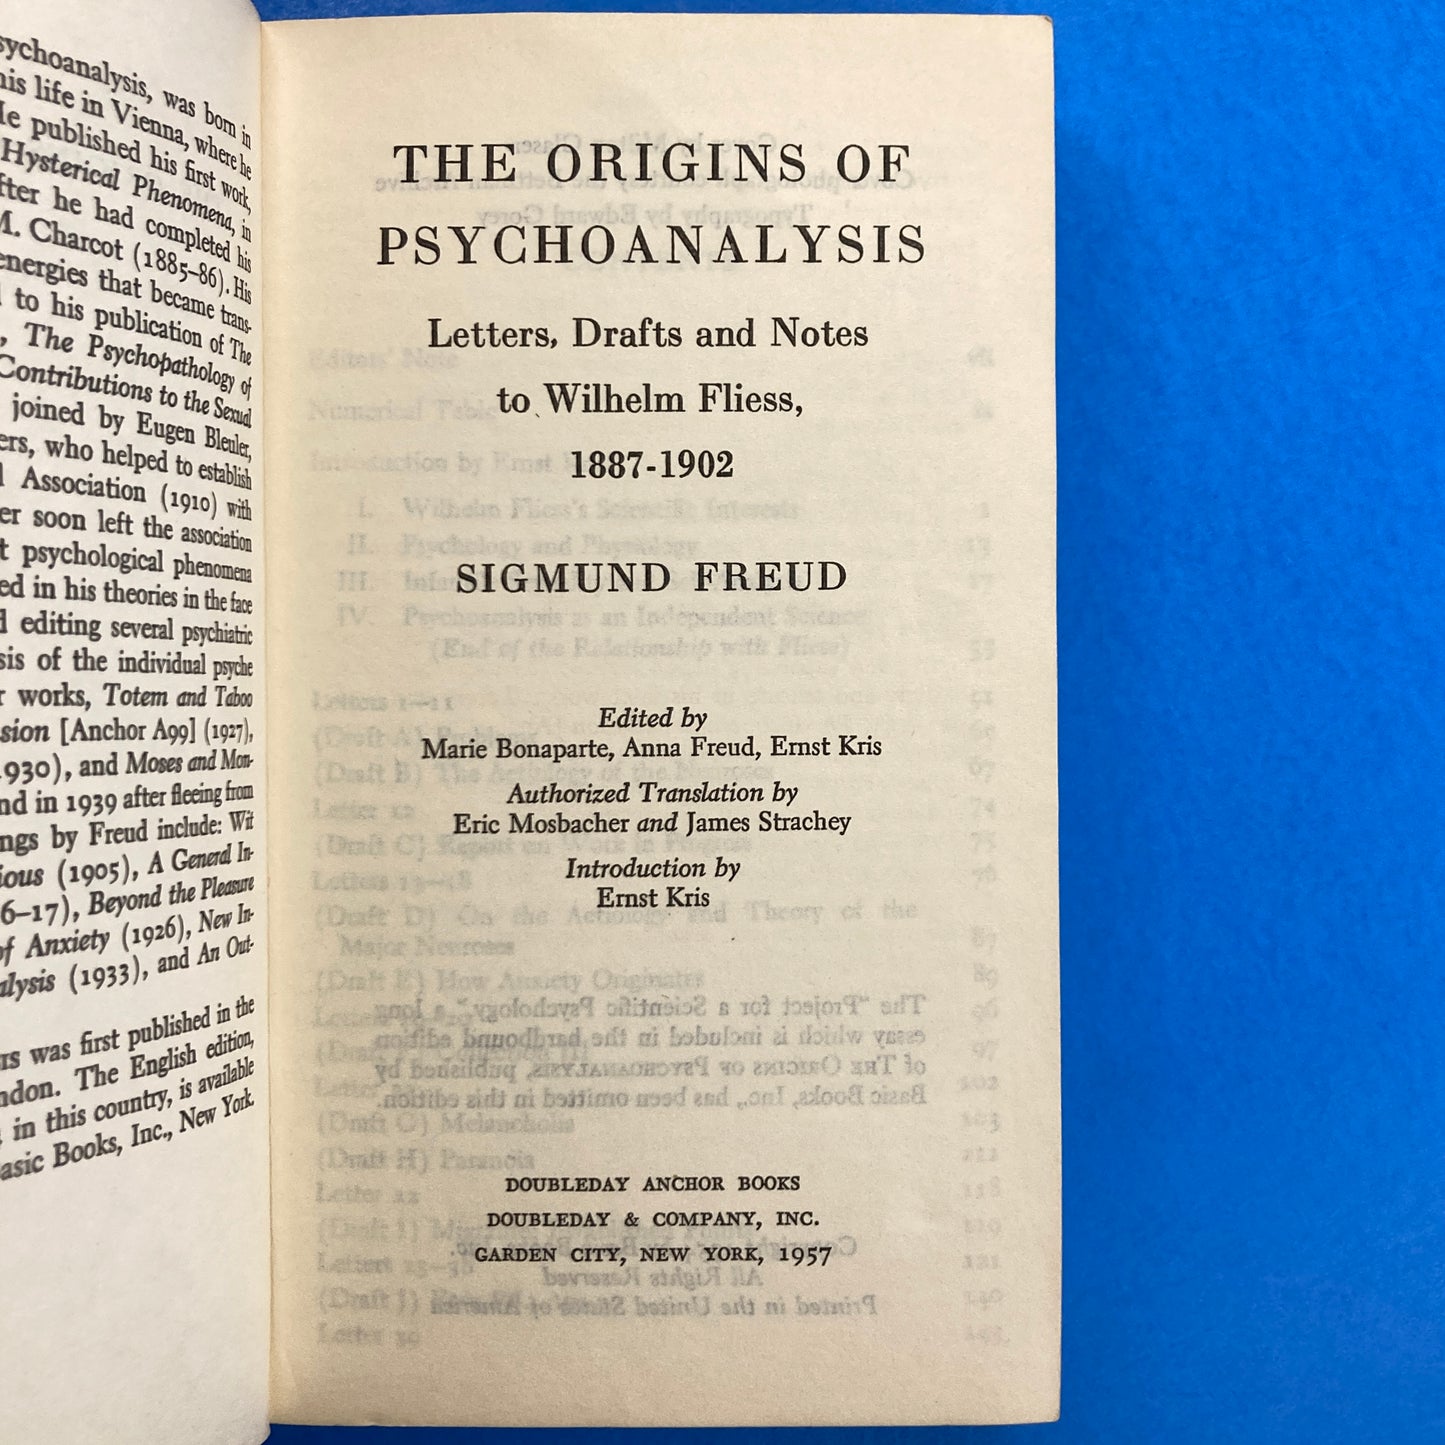 The Origins of Psychoanalysis